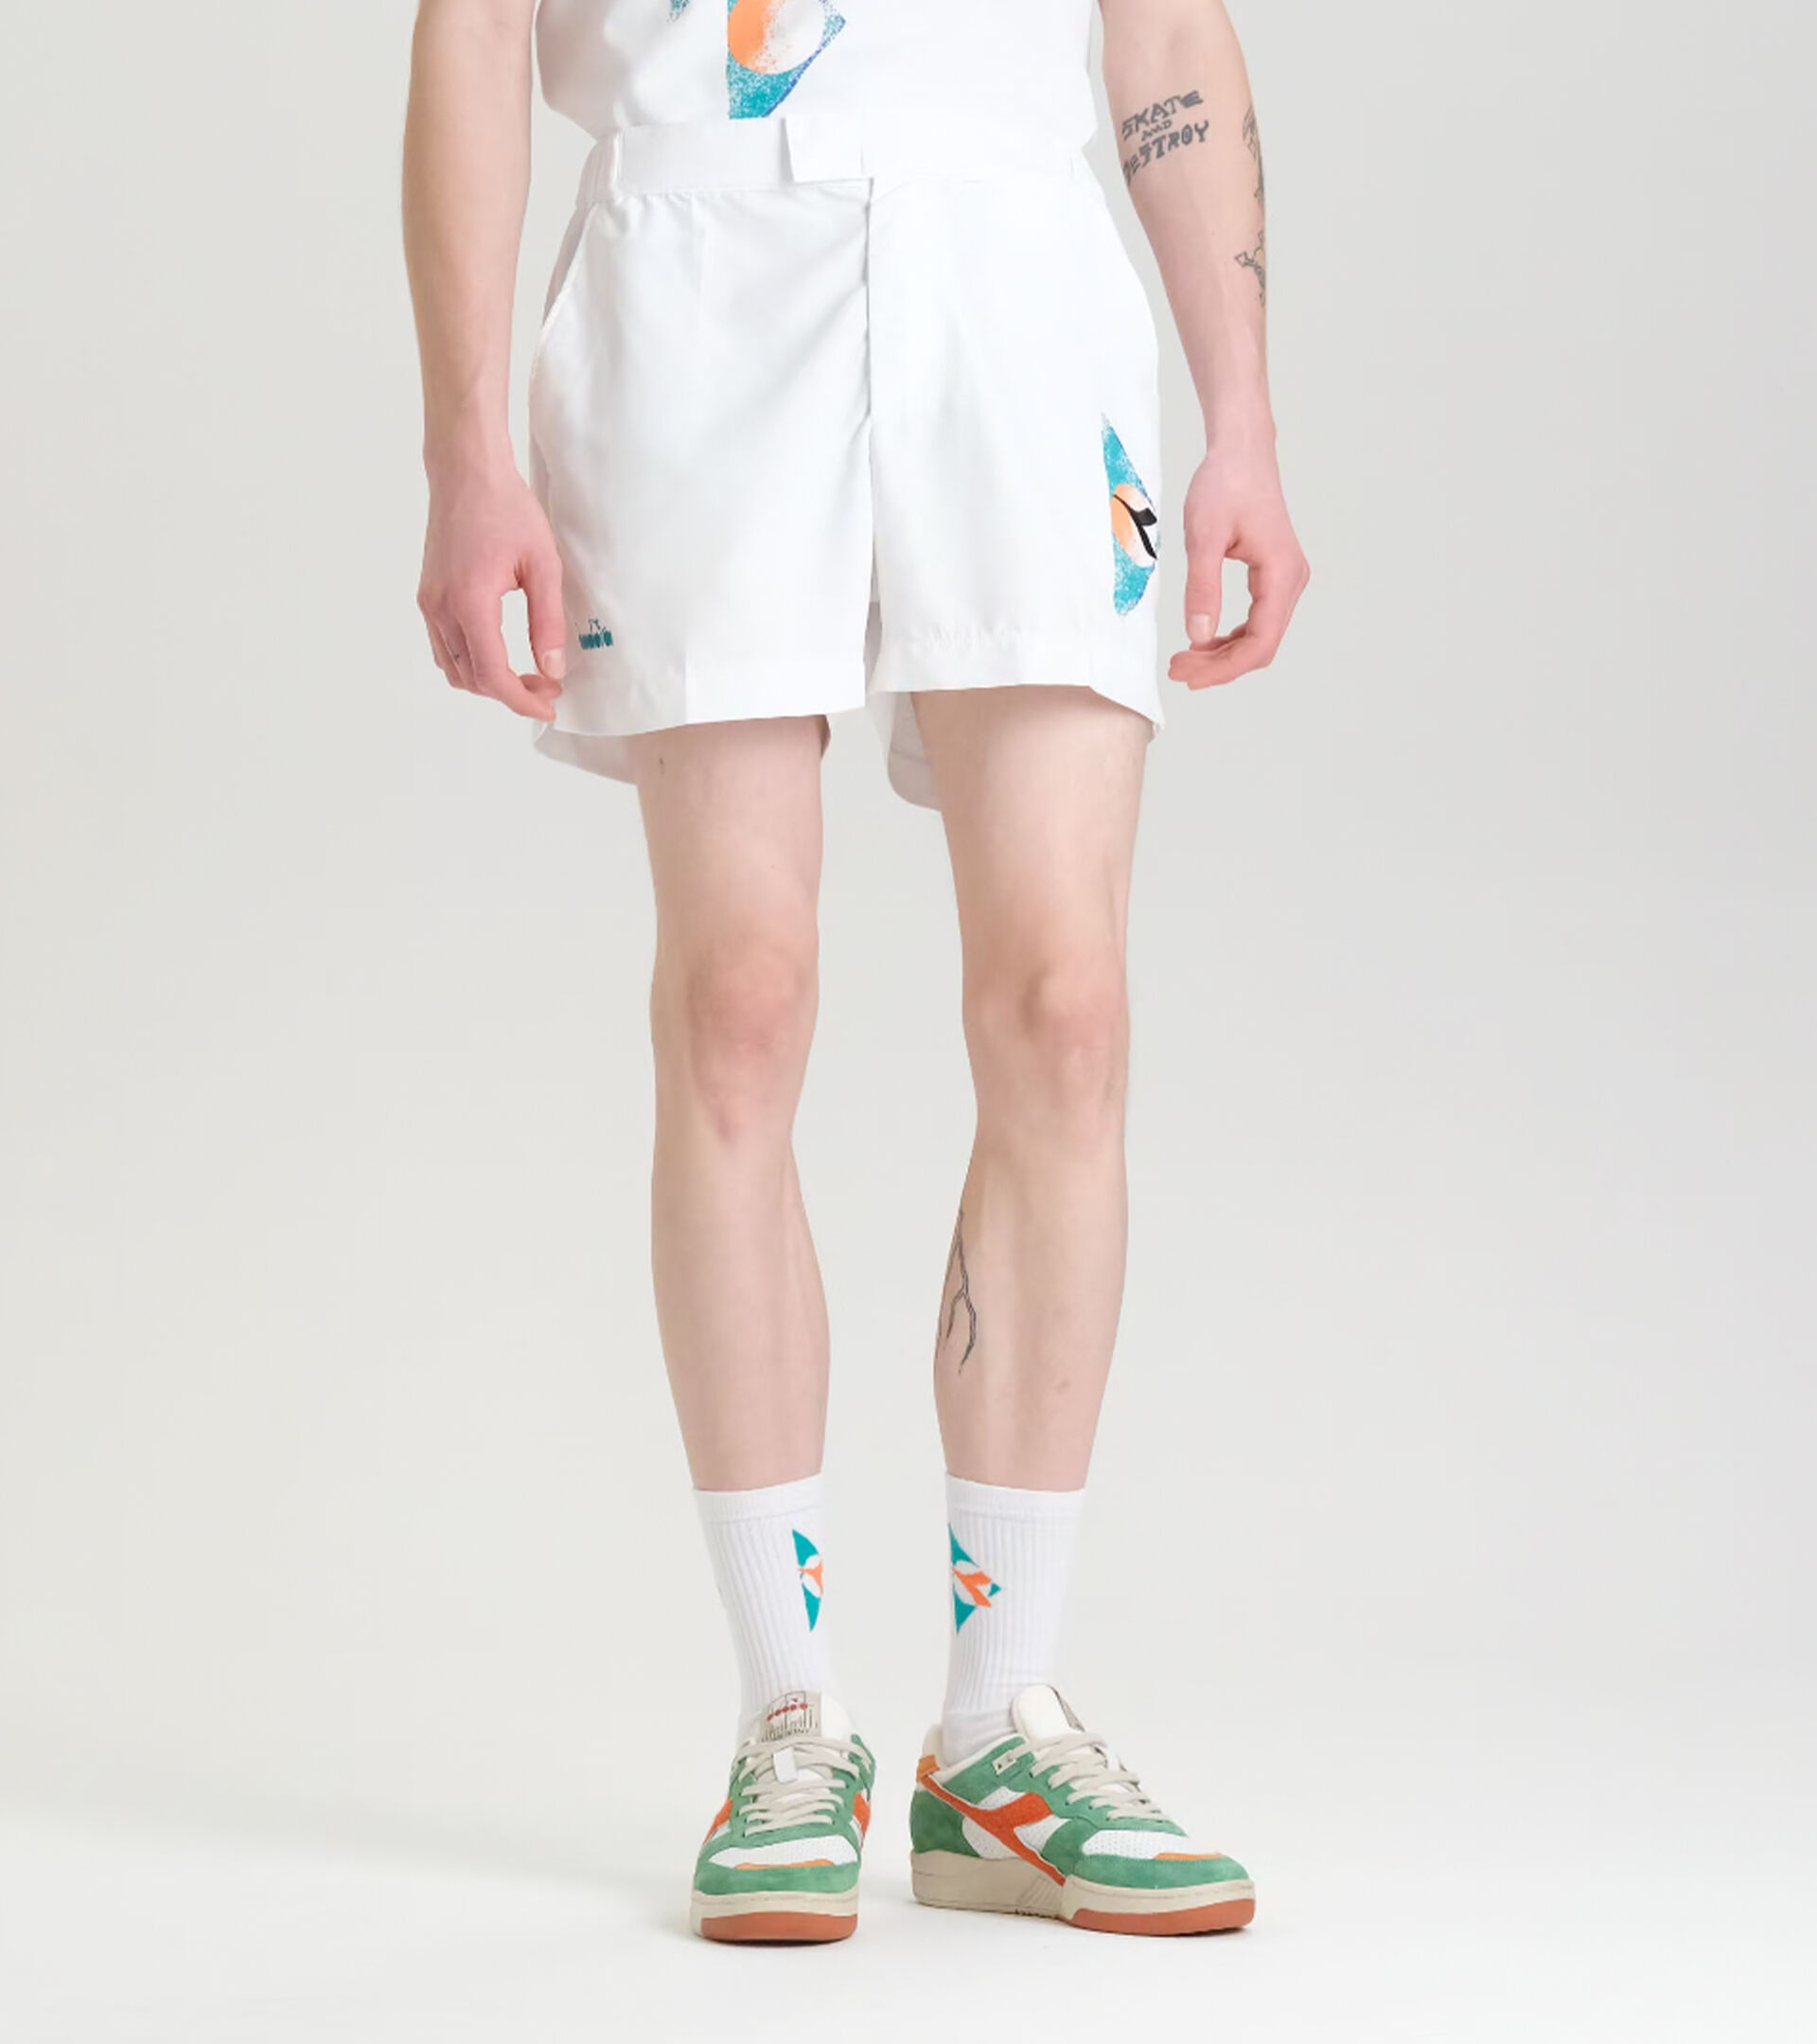 90s-inspired shorts - Made in Italy - Men’s SHORTS TENNIS 90 OPTICAL WHITE - Diadora